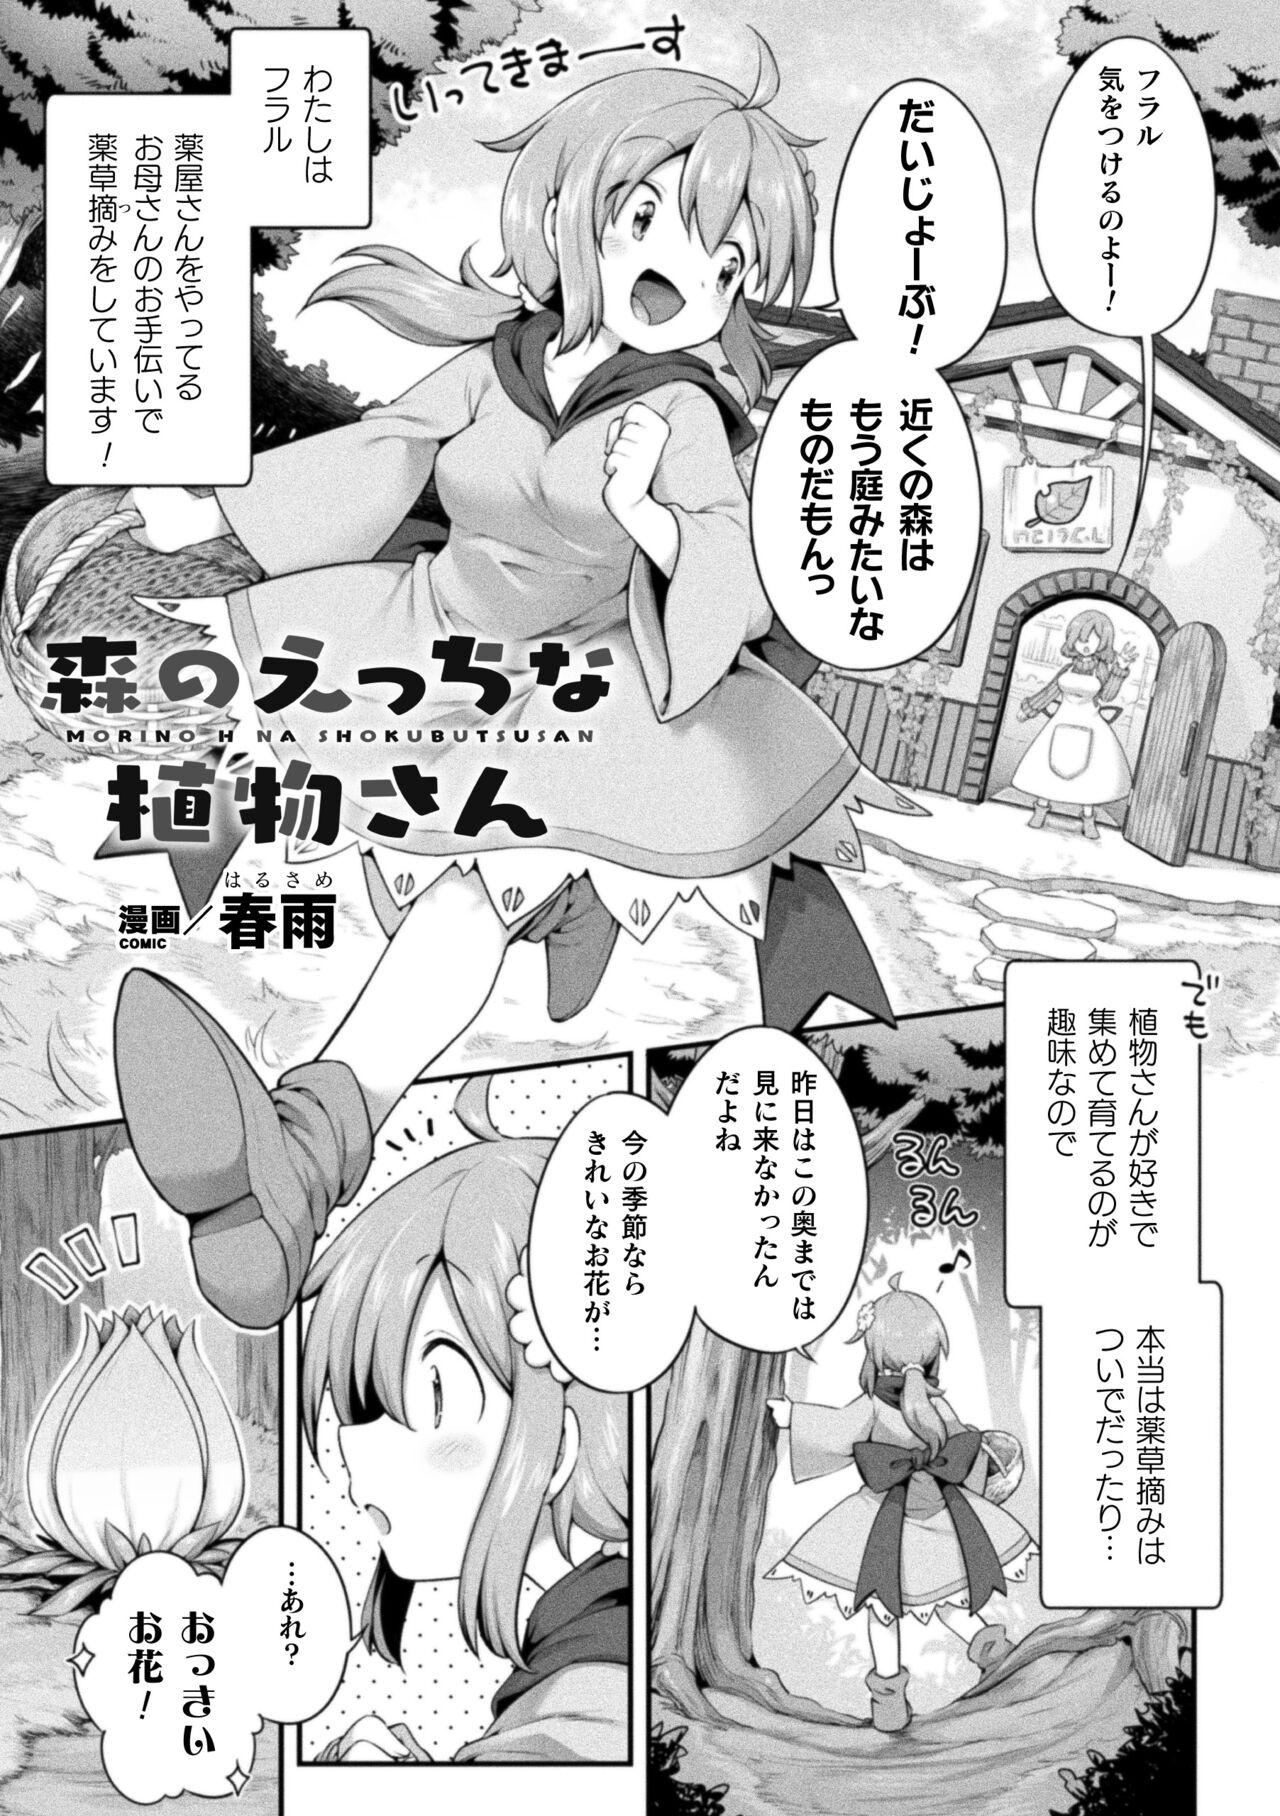 Topless 2D Comic Magazine Ishukan Yuri Ecchi Vol. 1 Culote - Page 3